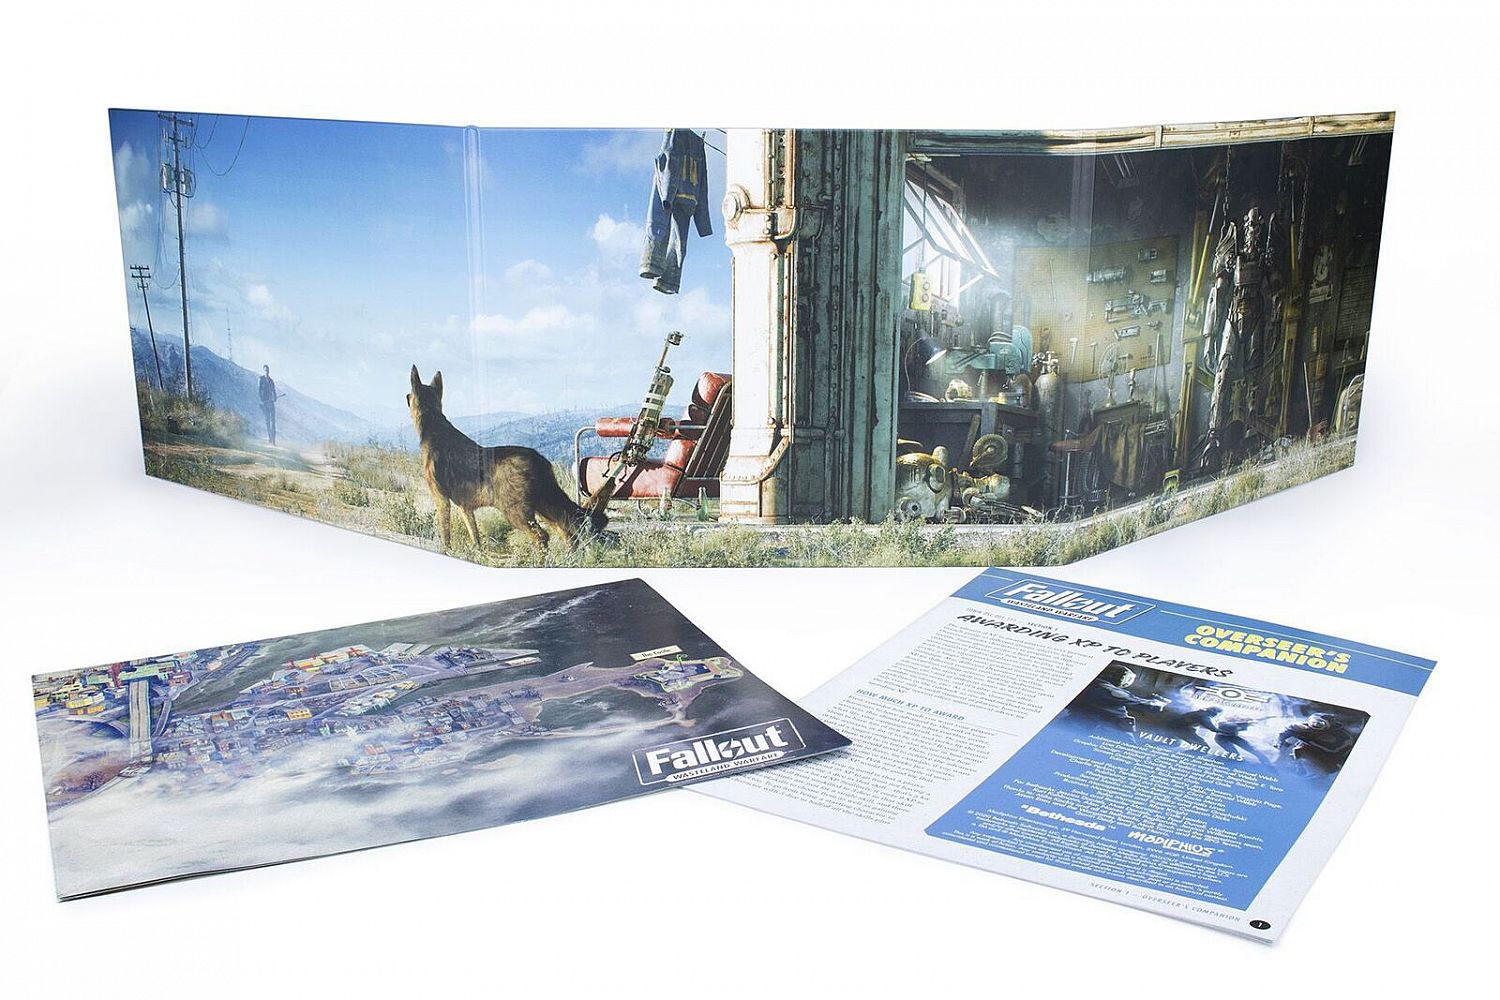 Fallout: Wasteland Warfare - RPG (Expansion Book) - PDF